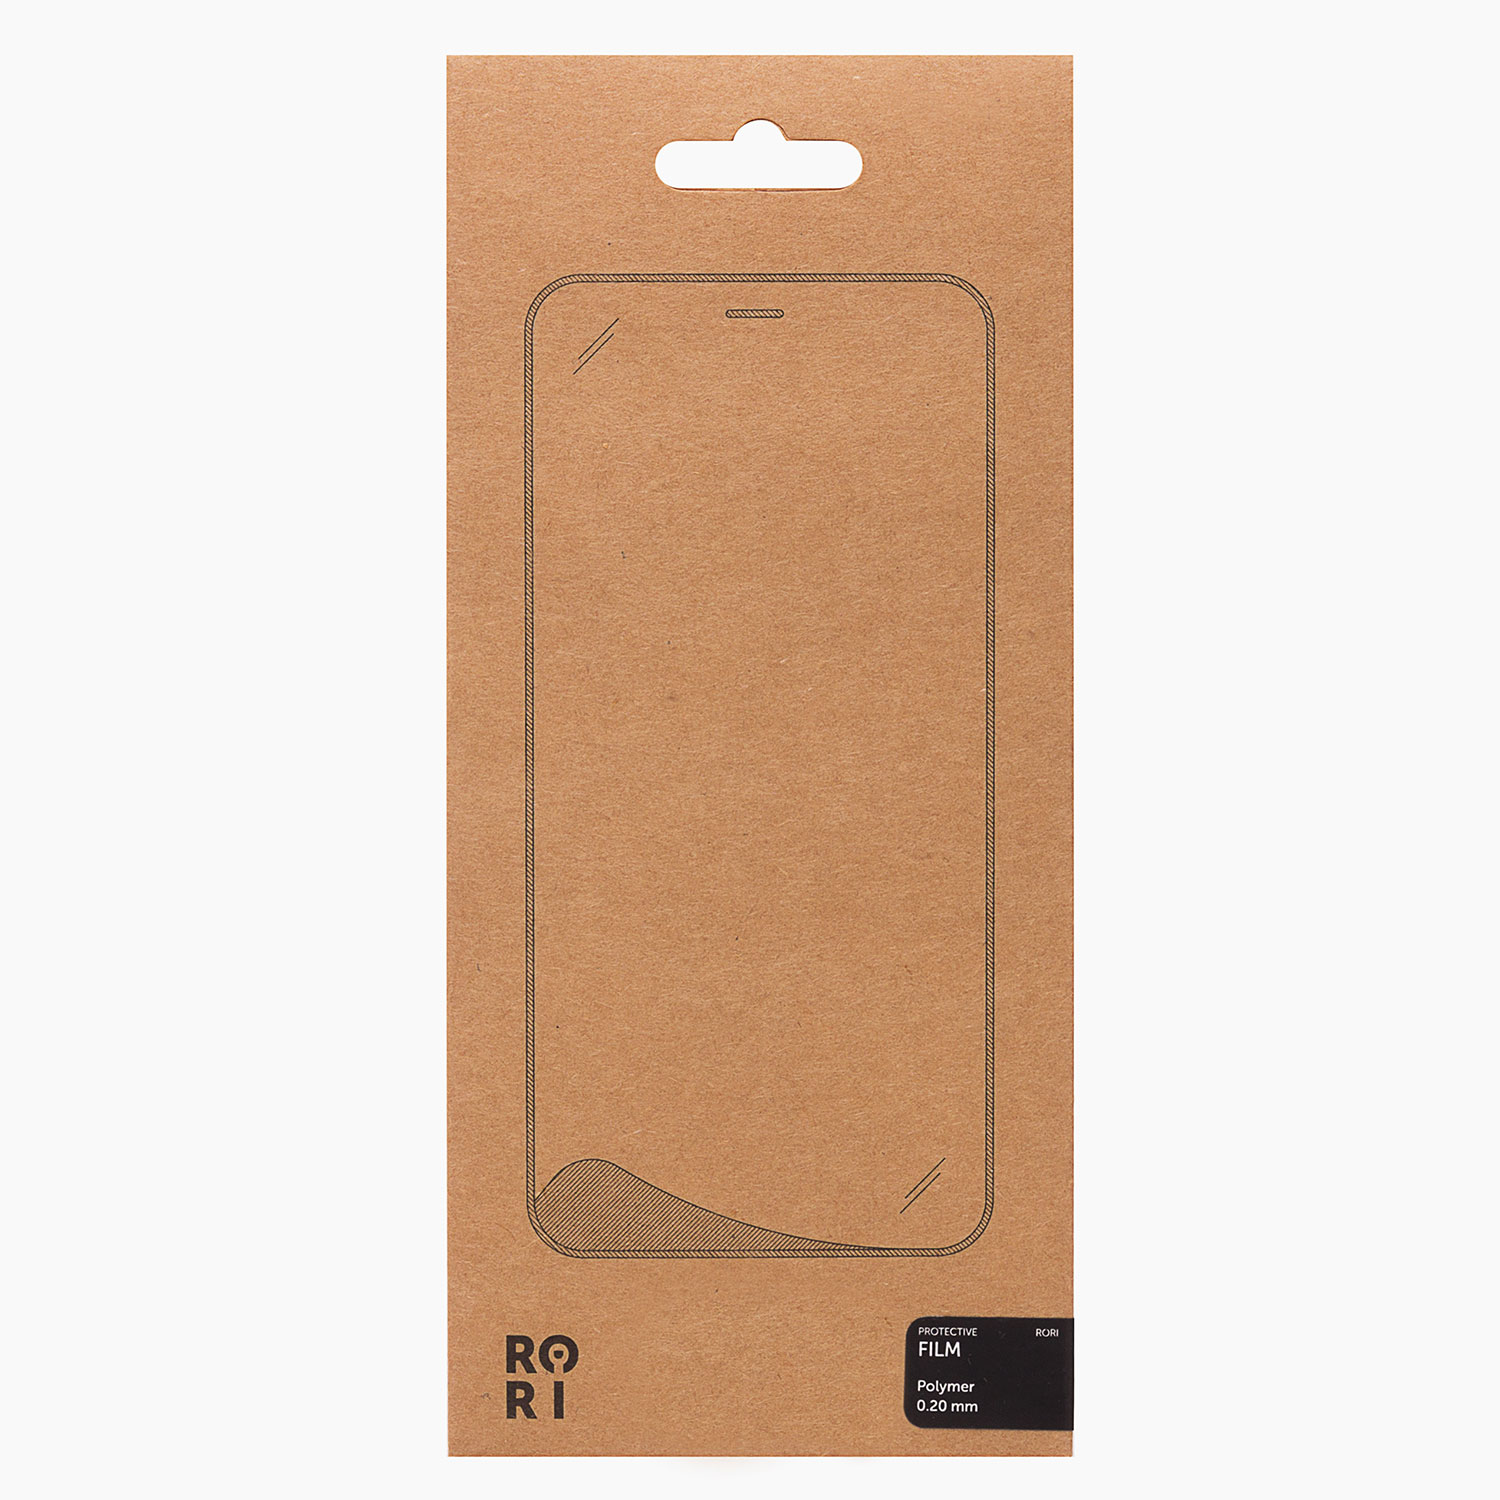 Защитная пленка Rori Polymer для экрана смартфона Samsung SM-A725 Galaxy A72, поверхность матовая, черная рамка (126535)